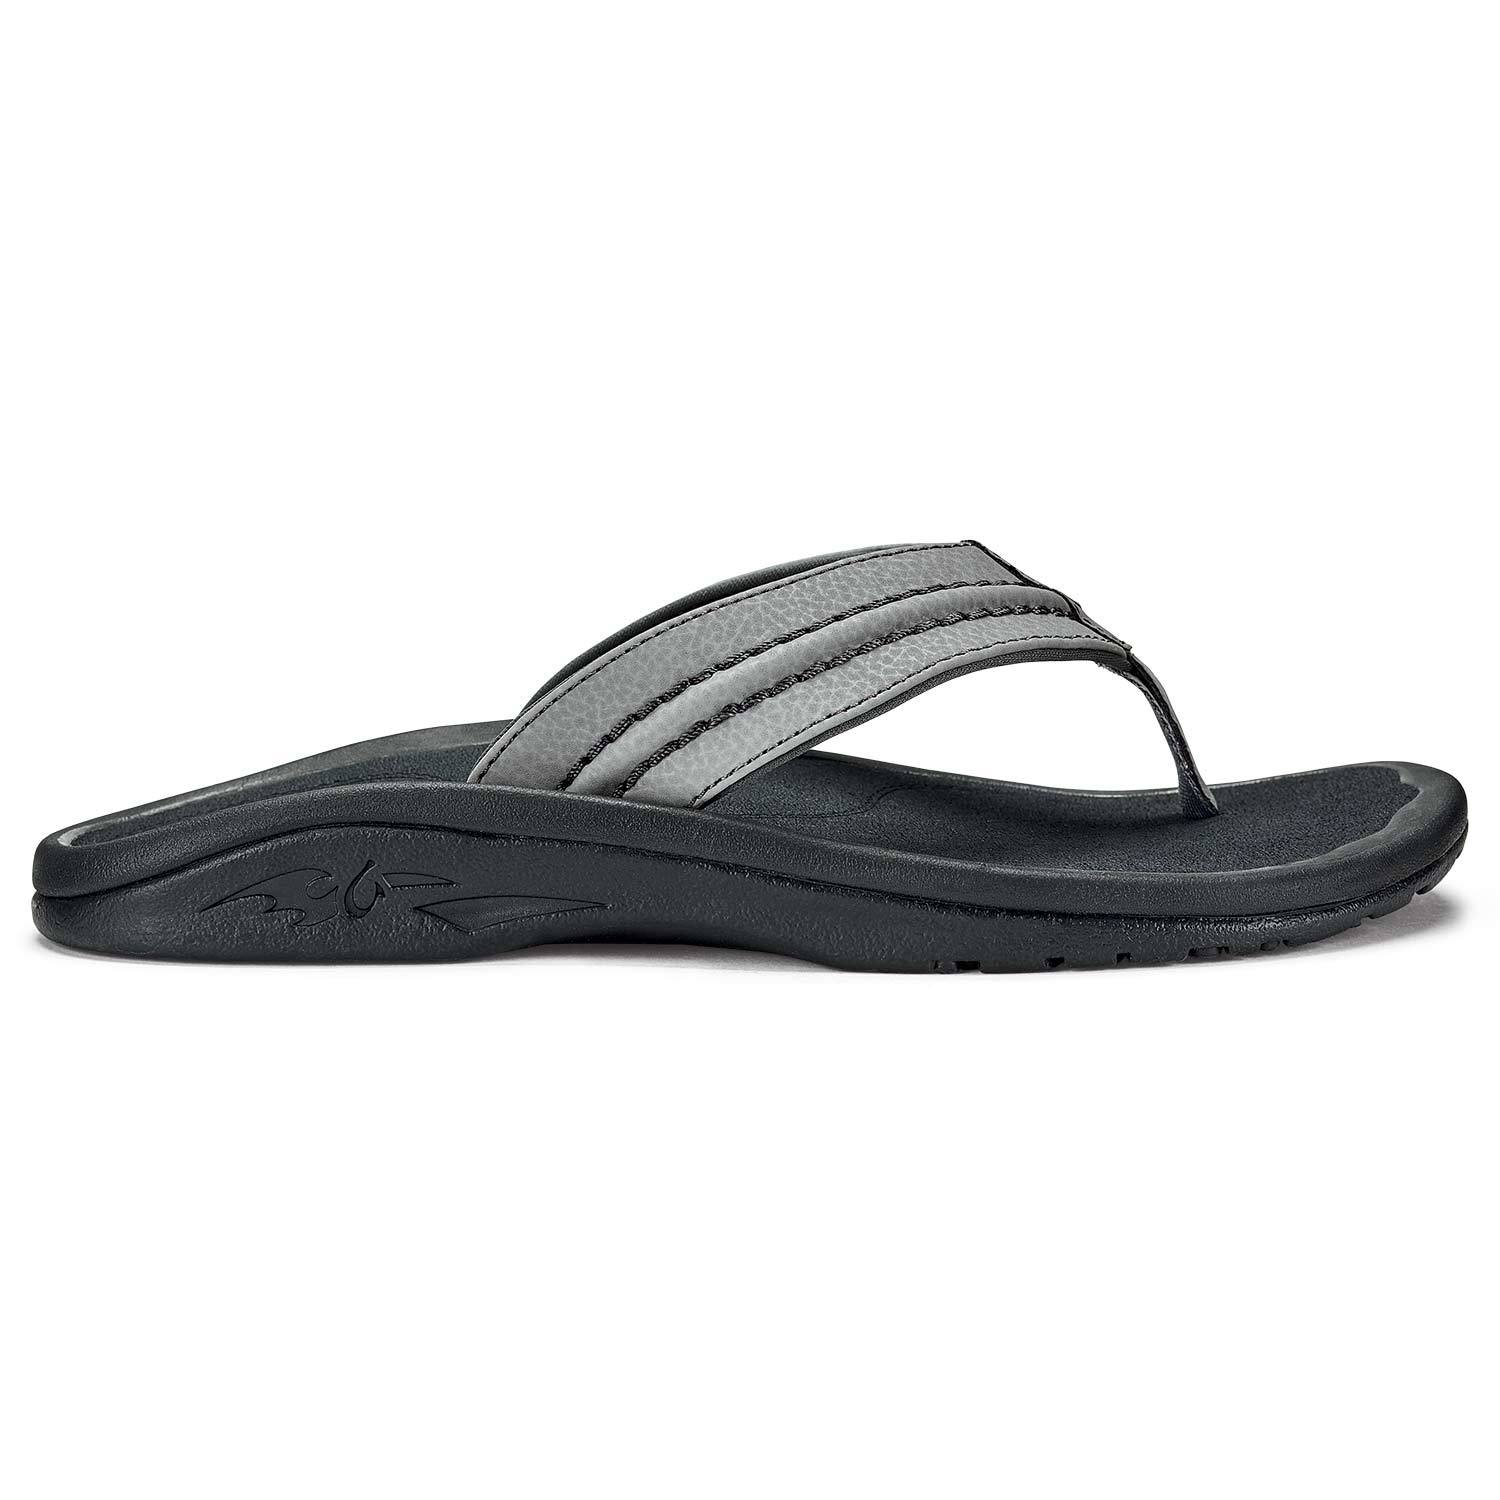 Men's Hokua Sandals | West Marine